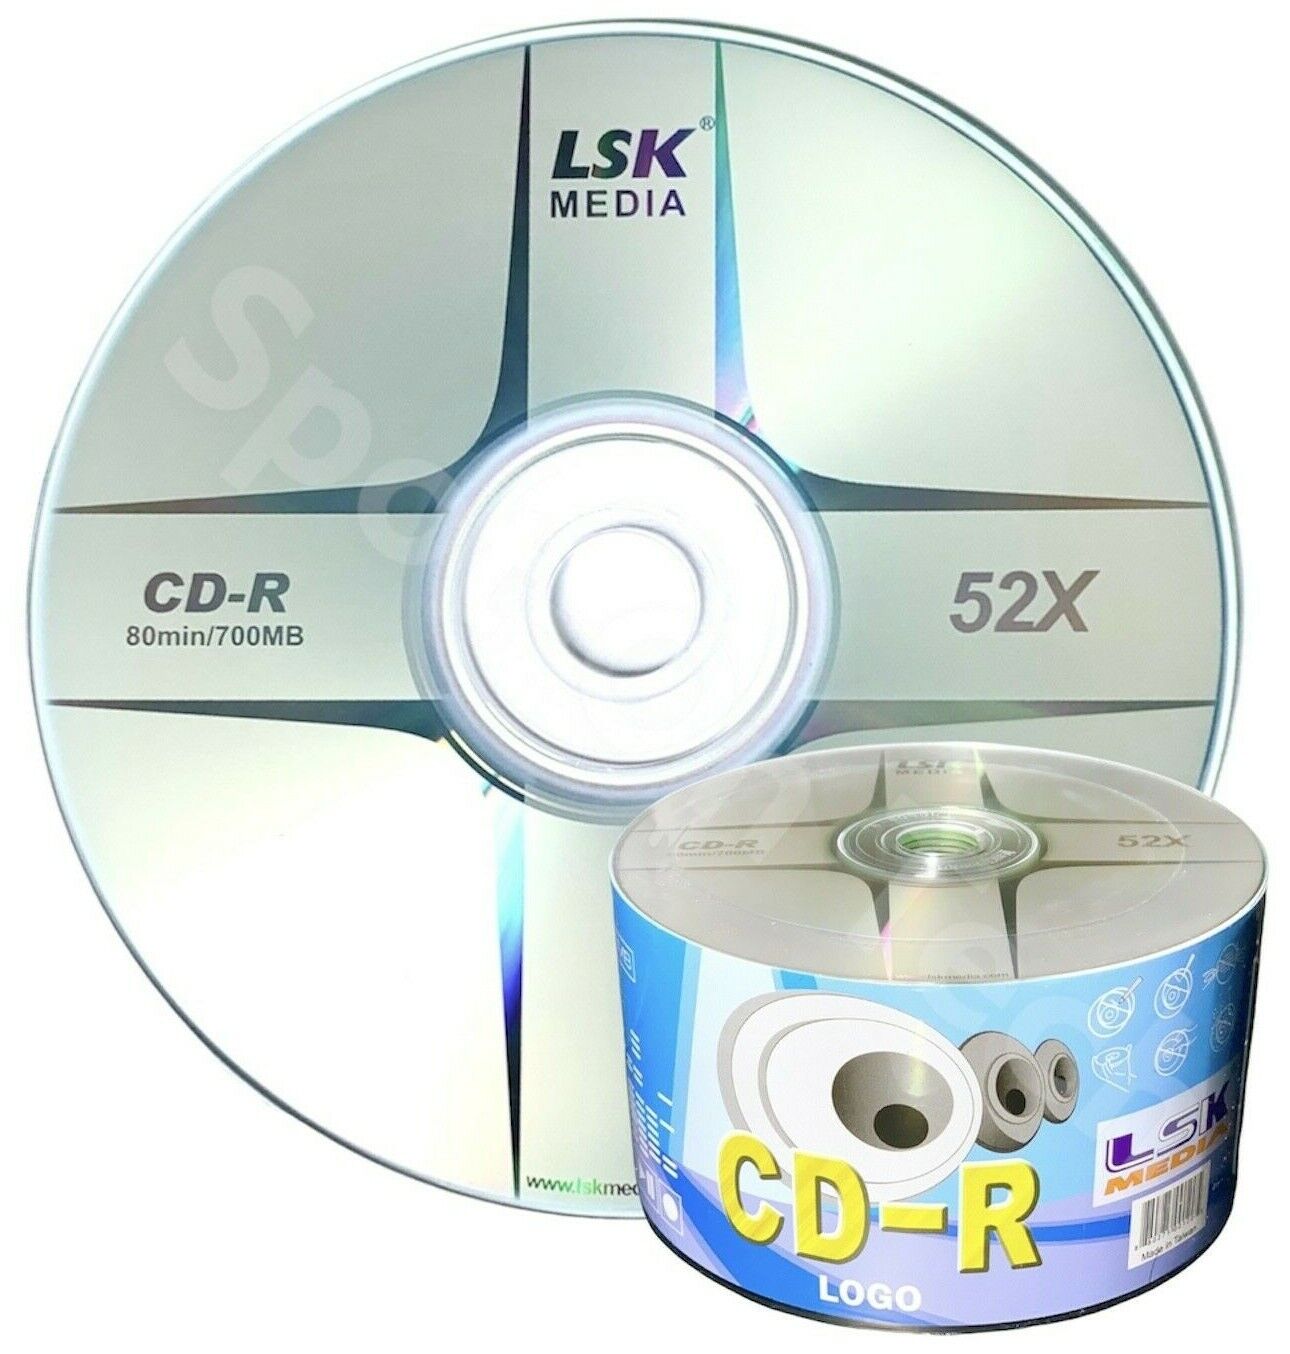 LSK CD CD-R Silver LOGO Top hp LOT - Duplication Grade 80Min/700MB/52x SAME DAY